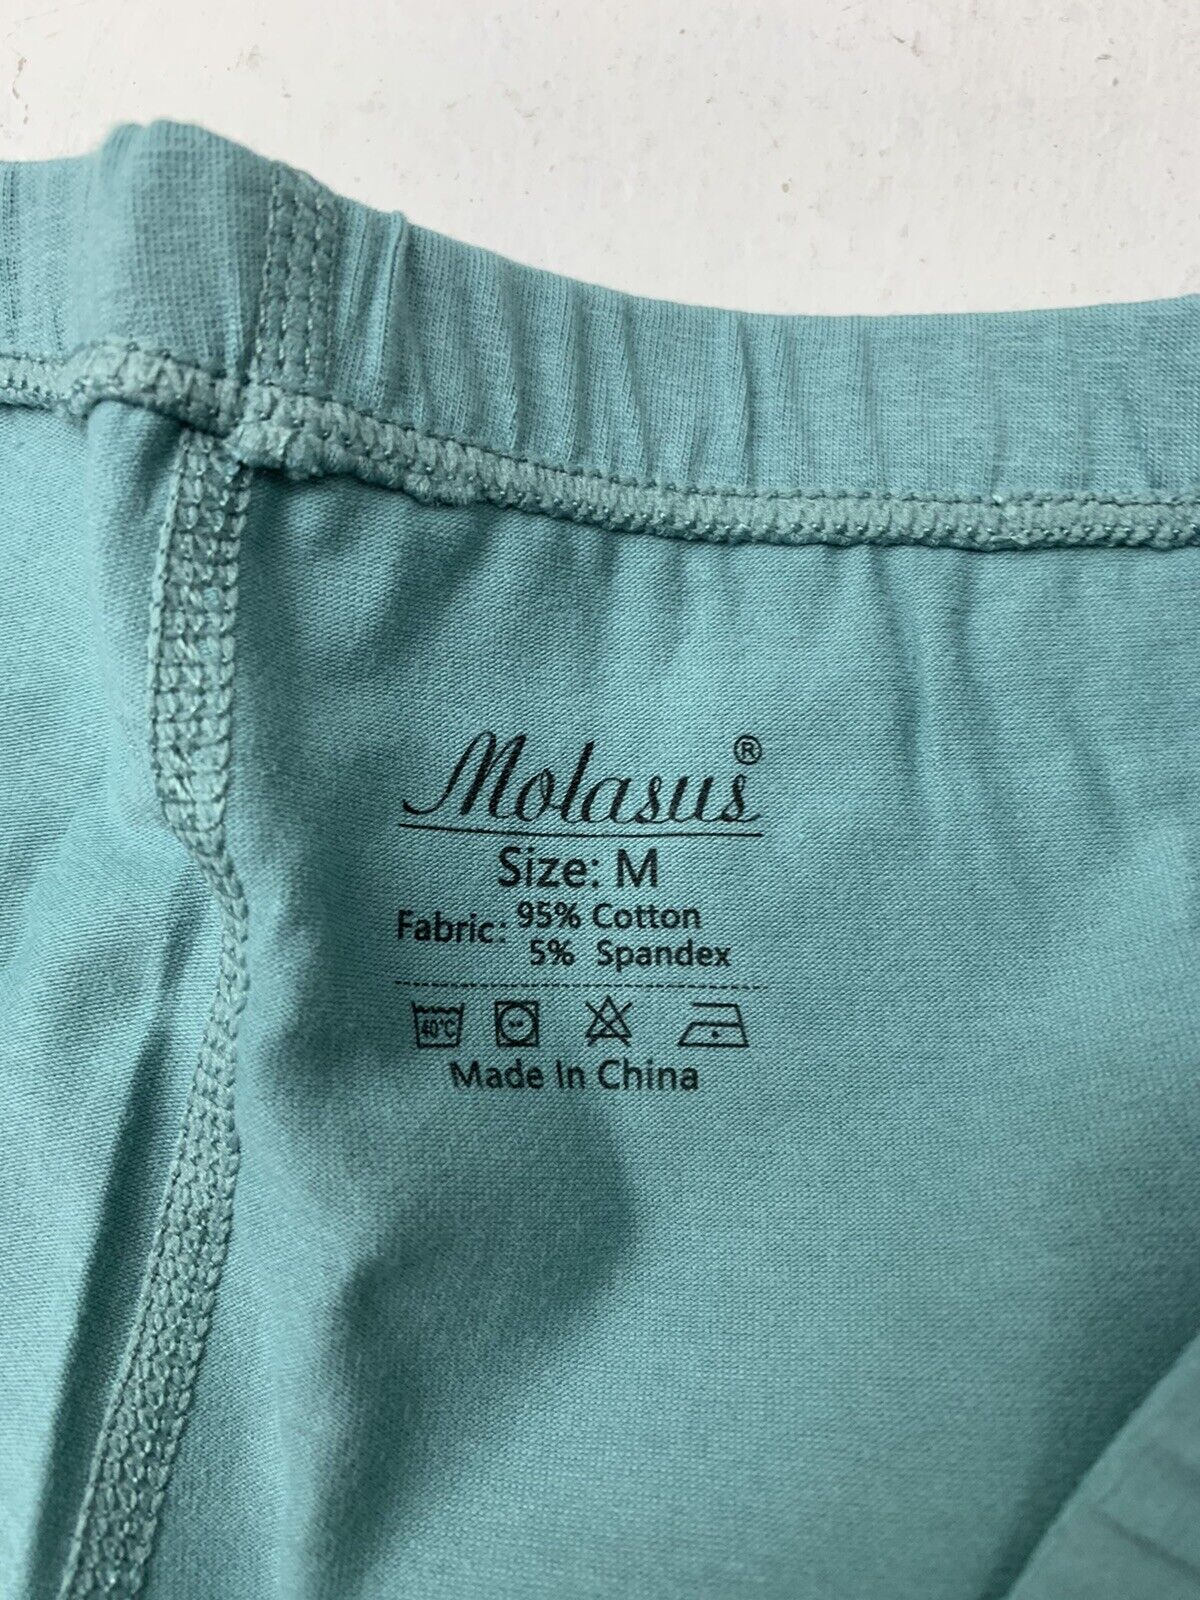 Molasus Womens 3 Pack Boy Short Briefs Size Medium - beyond exchange